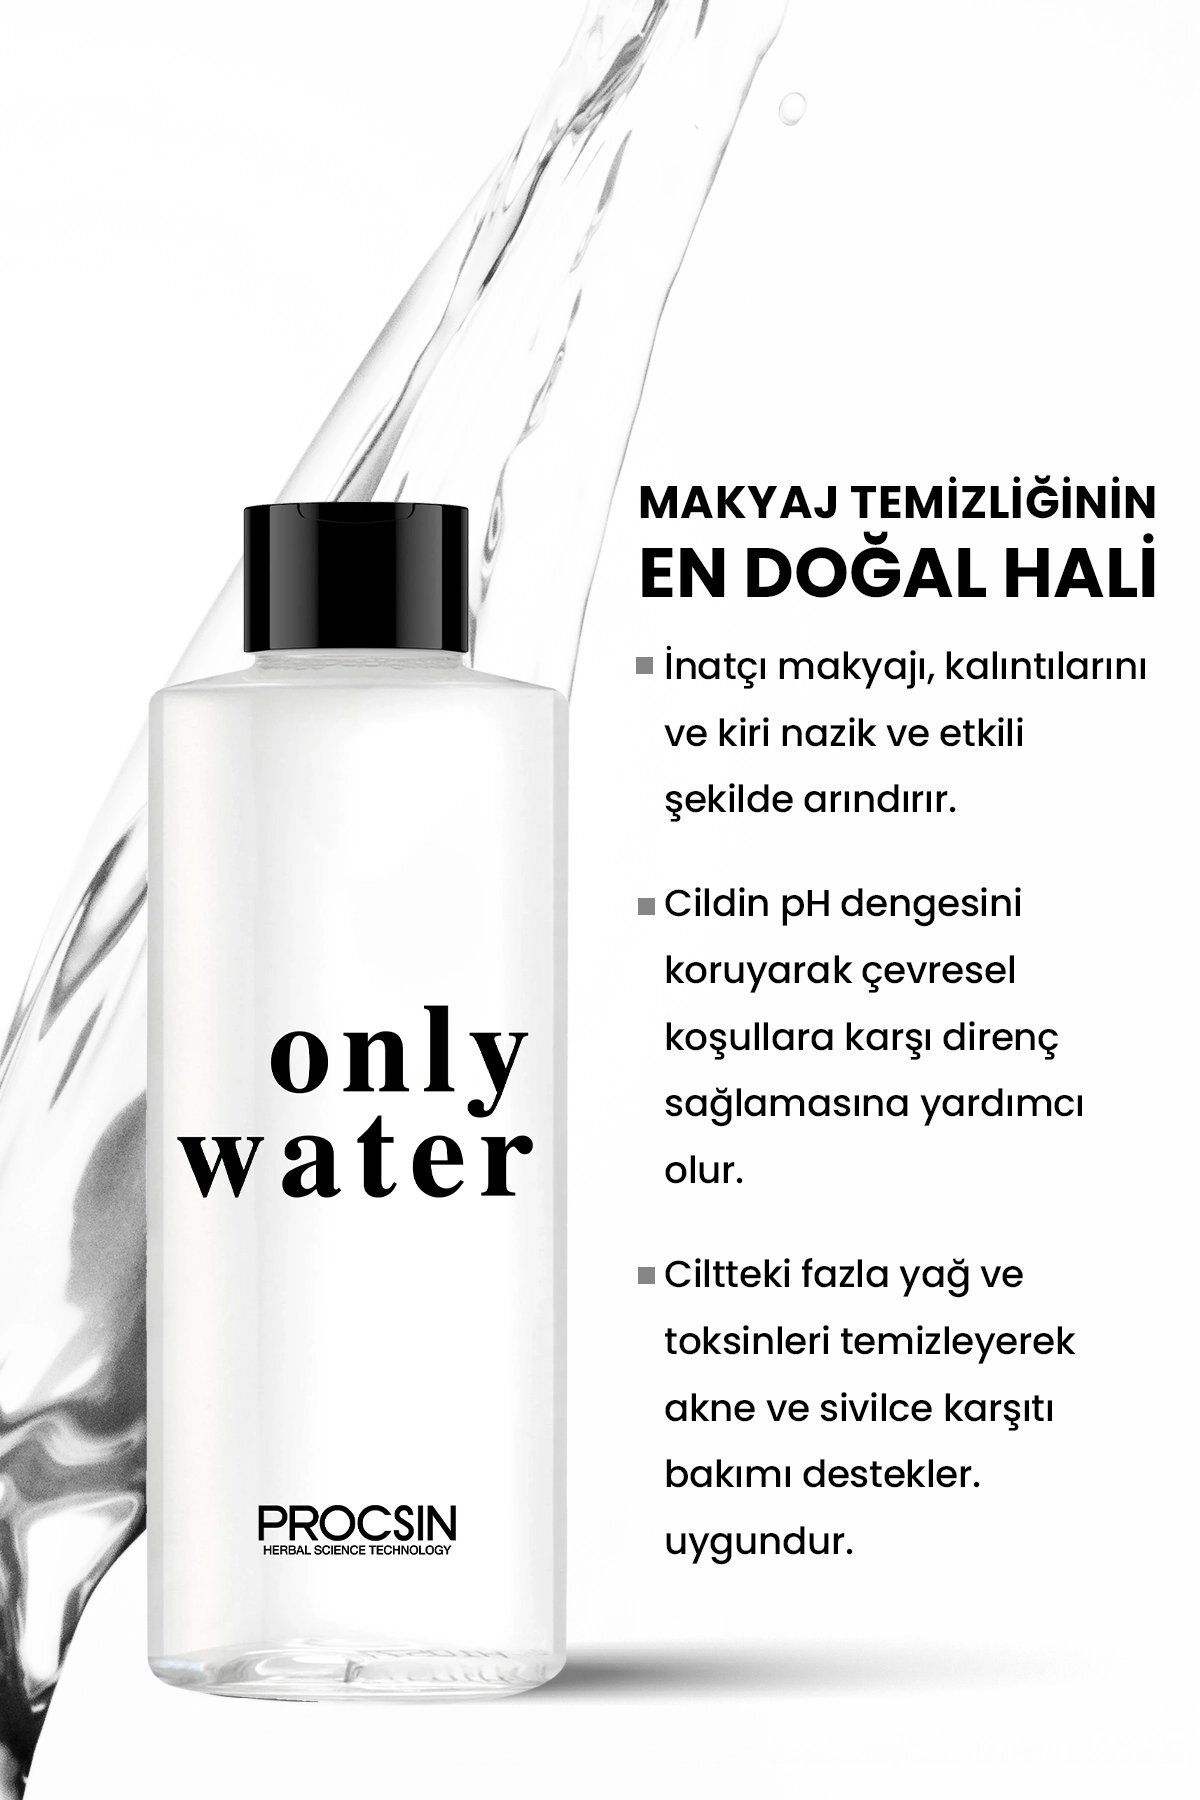 PROCSIN آب تنها (100٪ آب) پاک کننده طبیعی پوست و آرایش